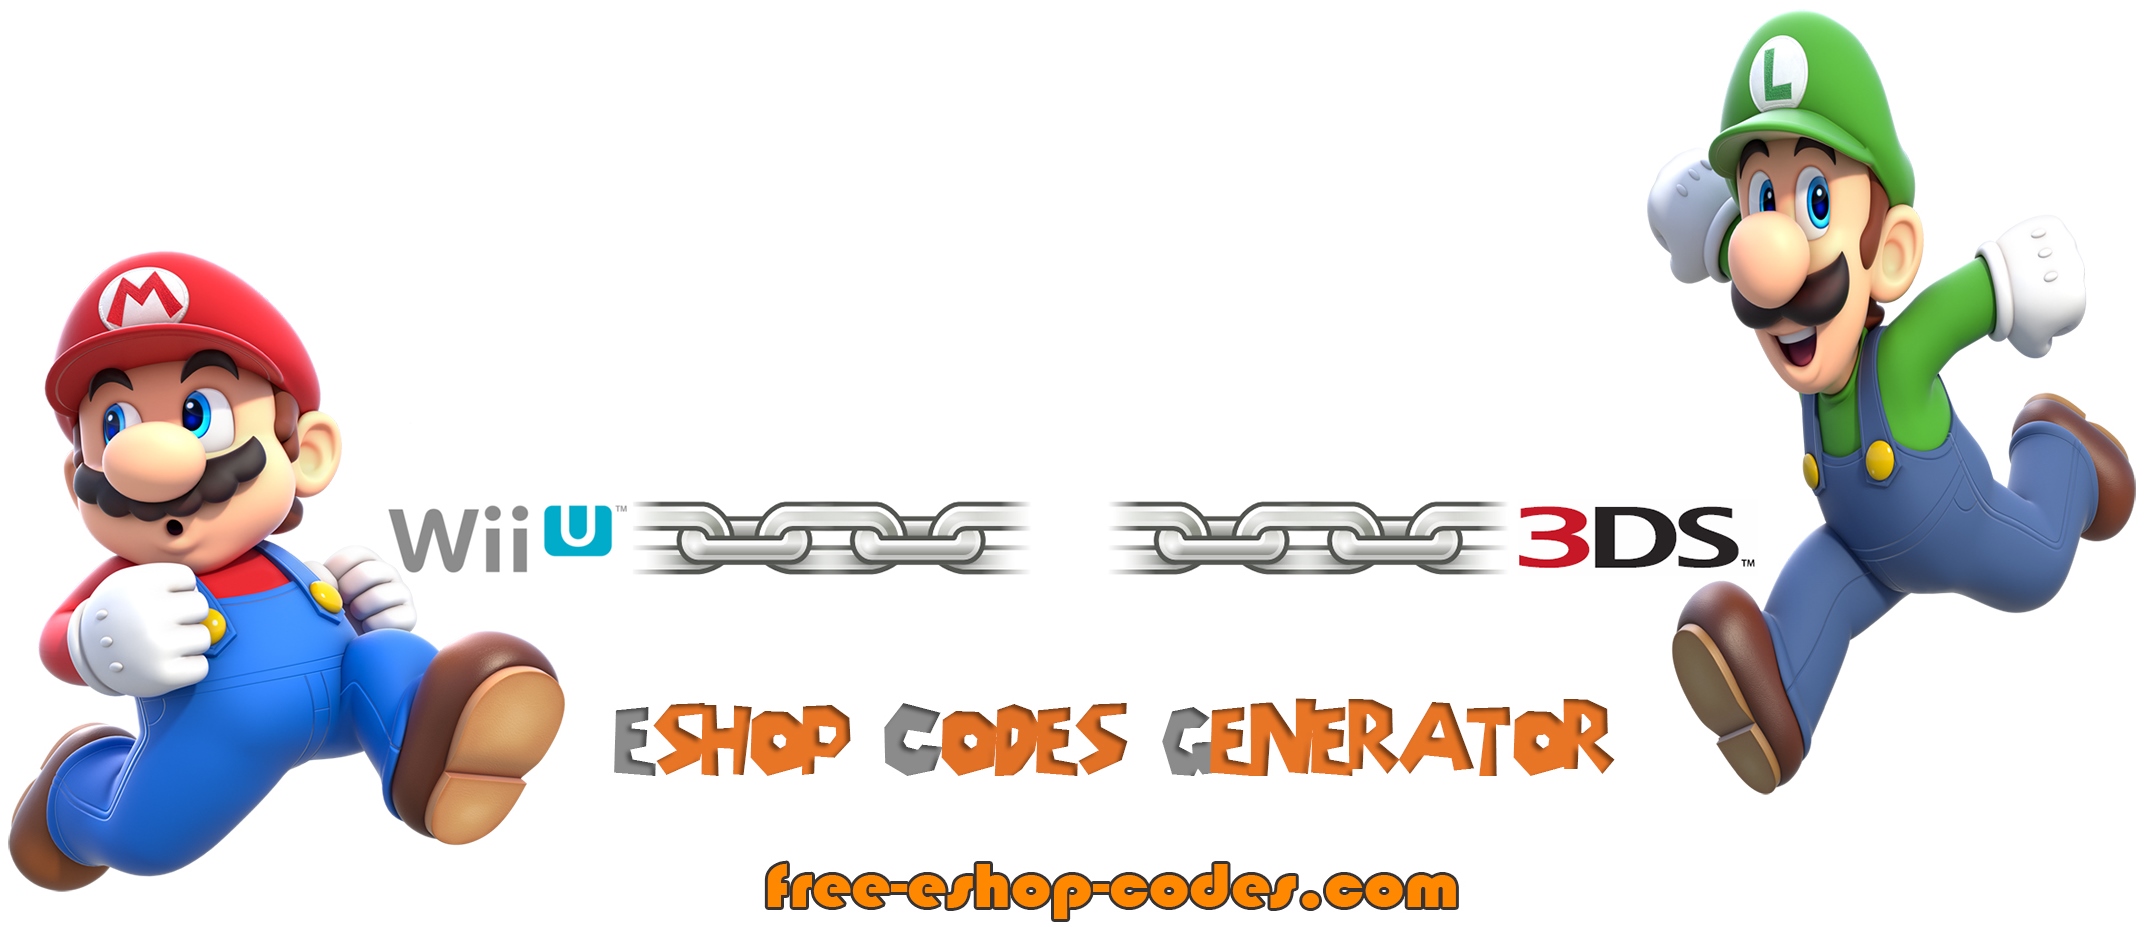 3ds Eshop Code Generator Free Download No Survey